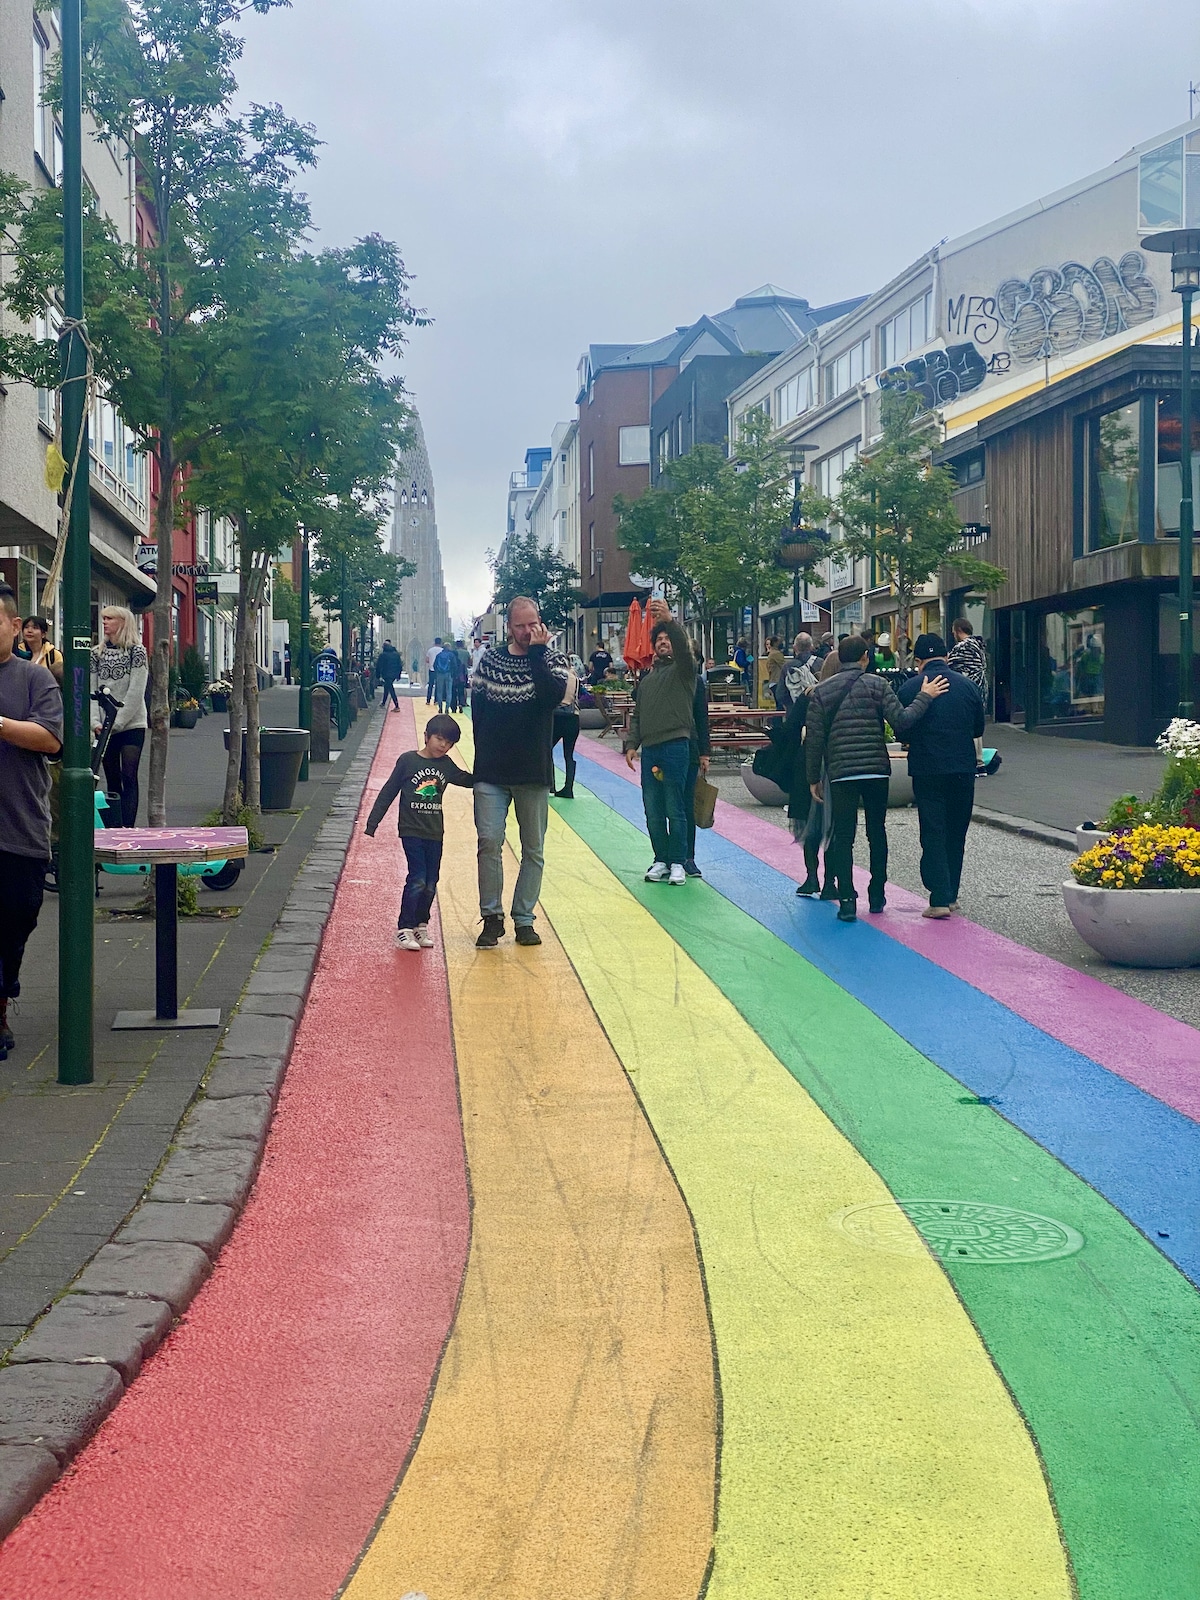 Rainbow Street, Reykjavik Iceland in summer